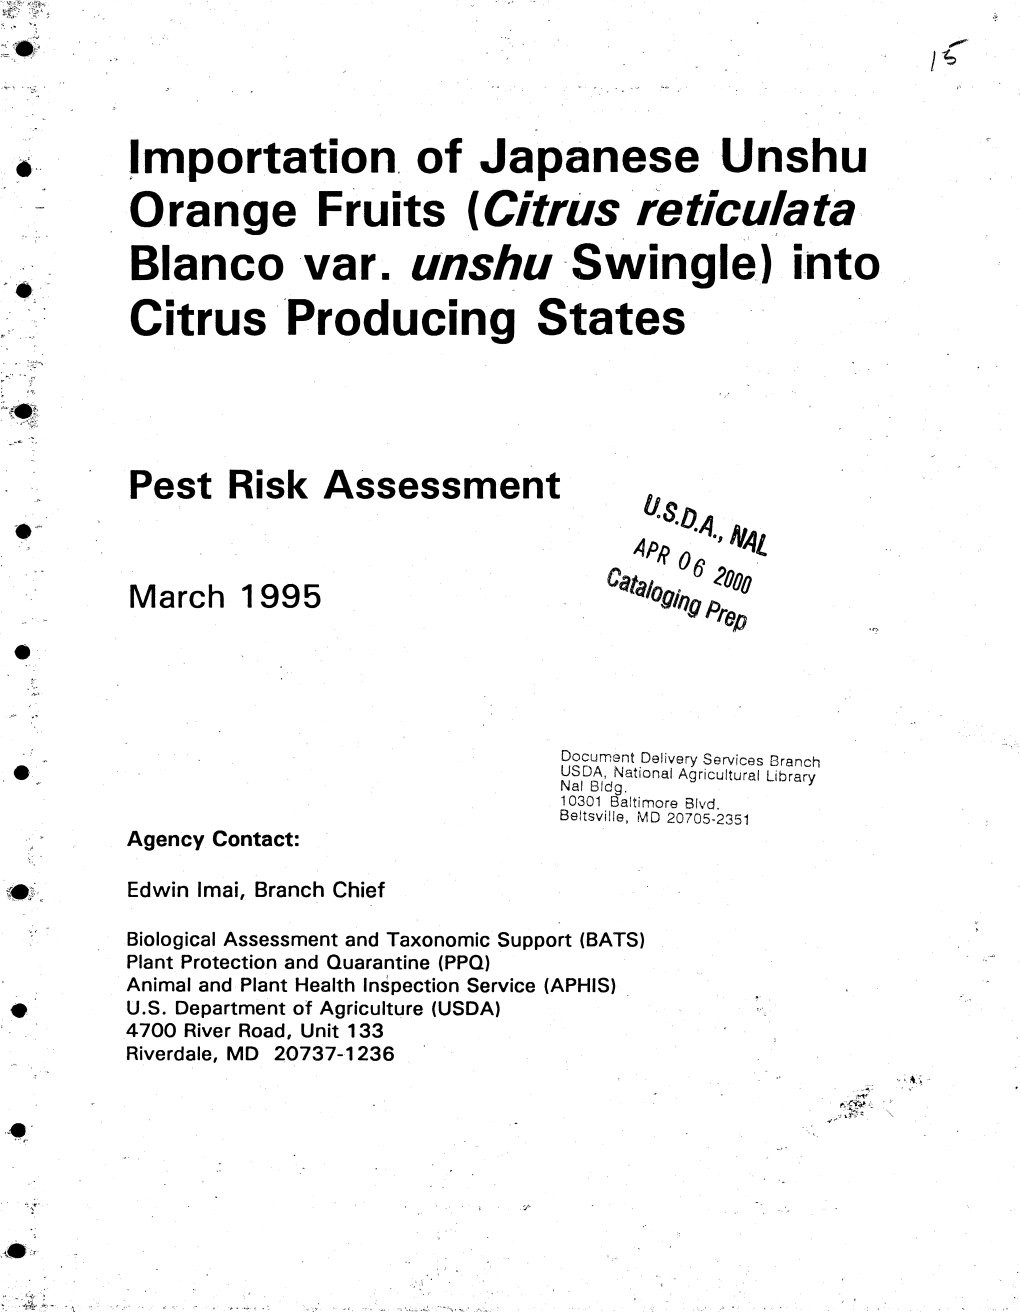 Scenario Analysis, Pests of Japanese Unshu Orange